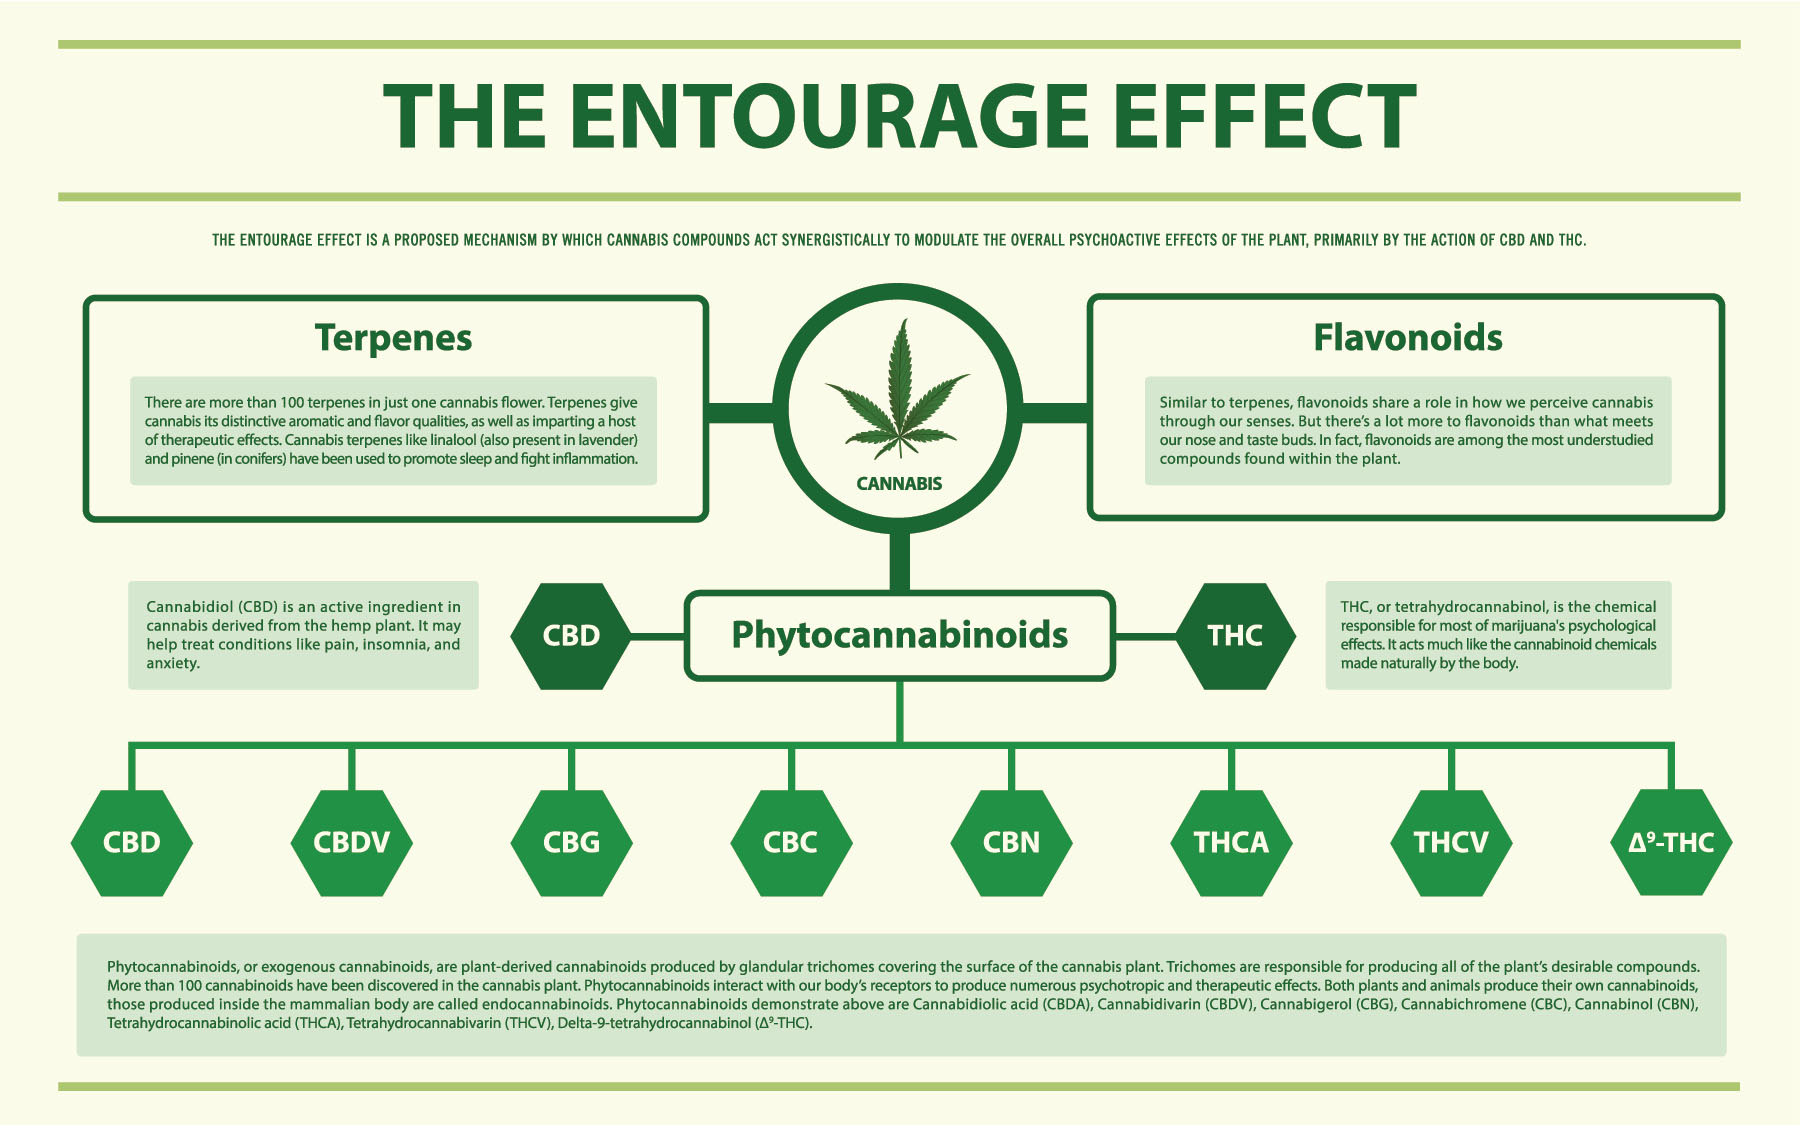 The Cannabis Entourage Effect: Myth or Reality?